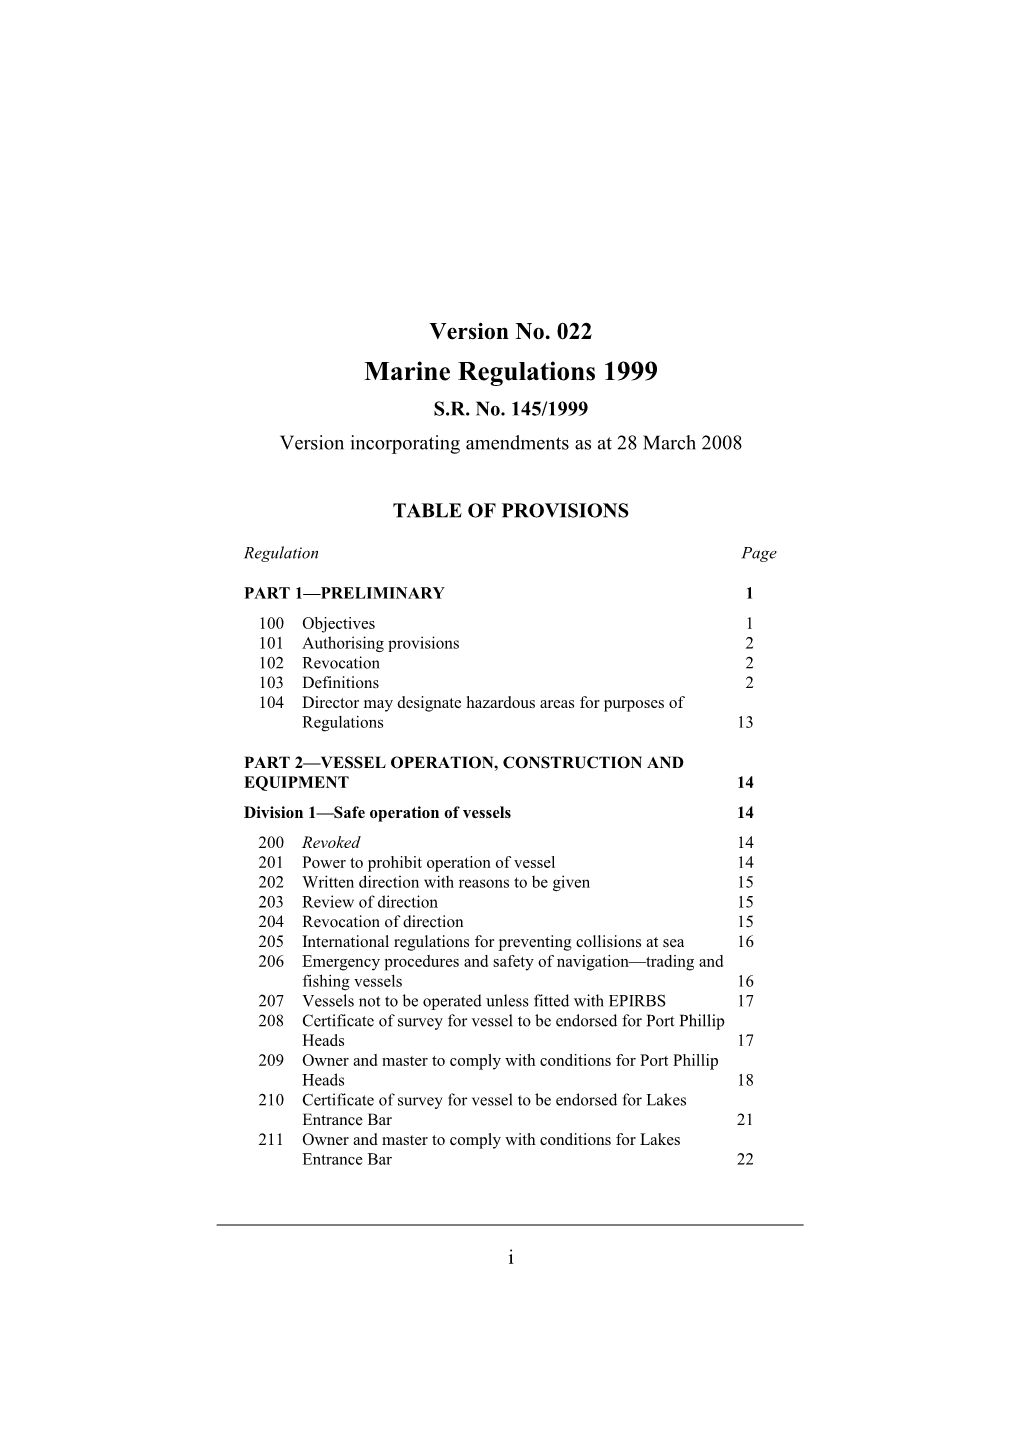 Version Incorporating Amendments As at 28 March 2008